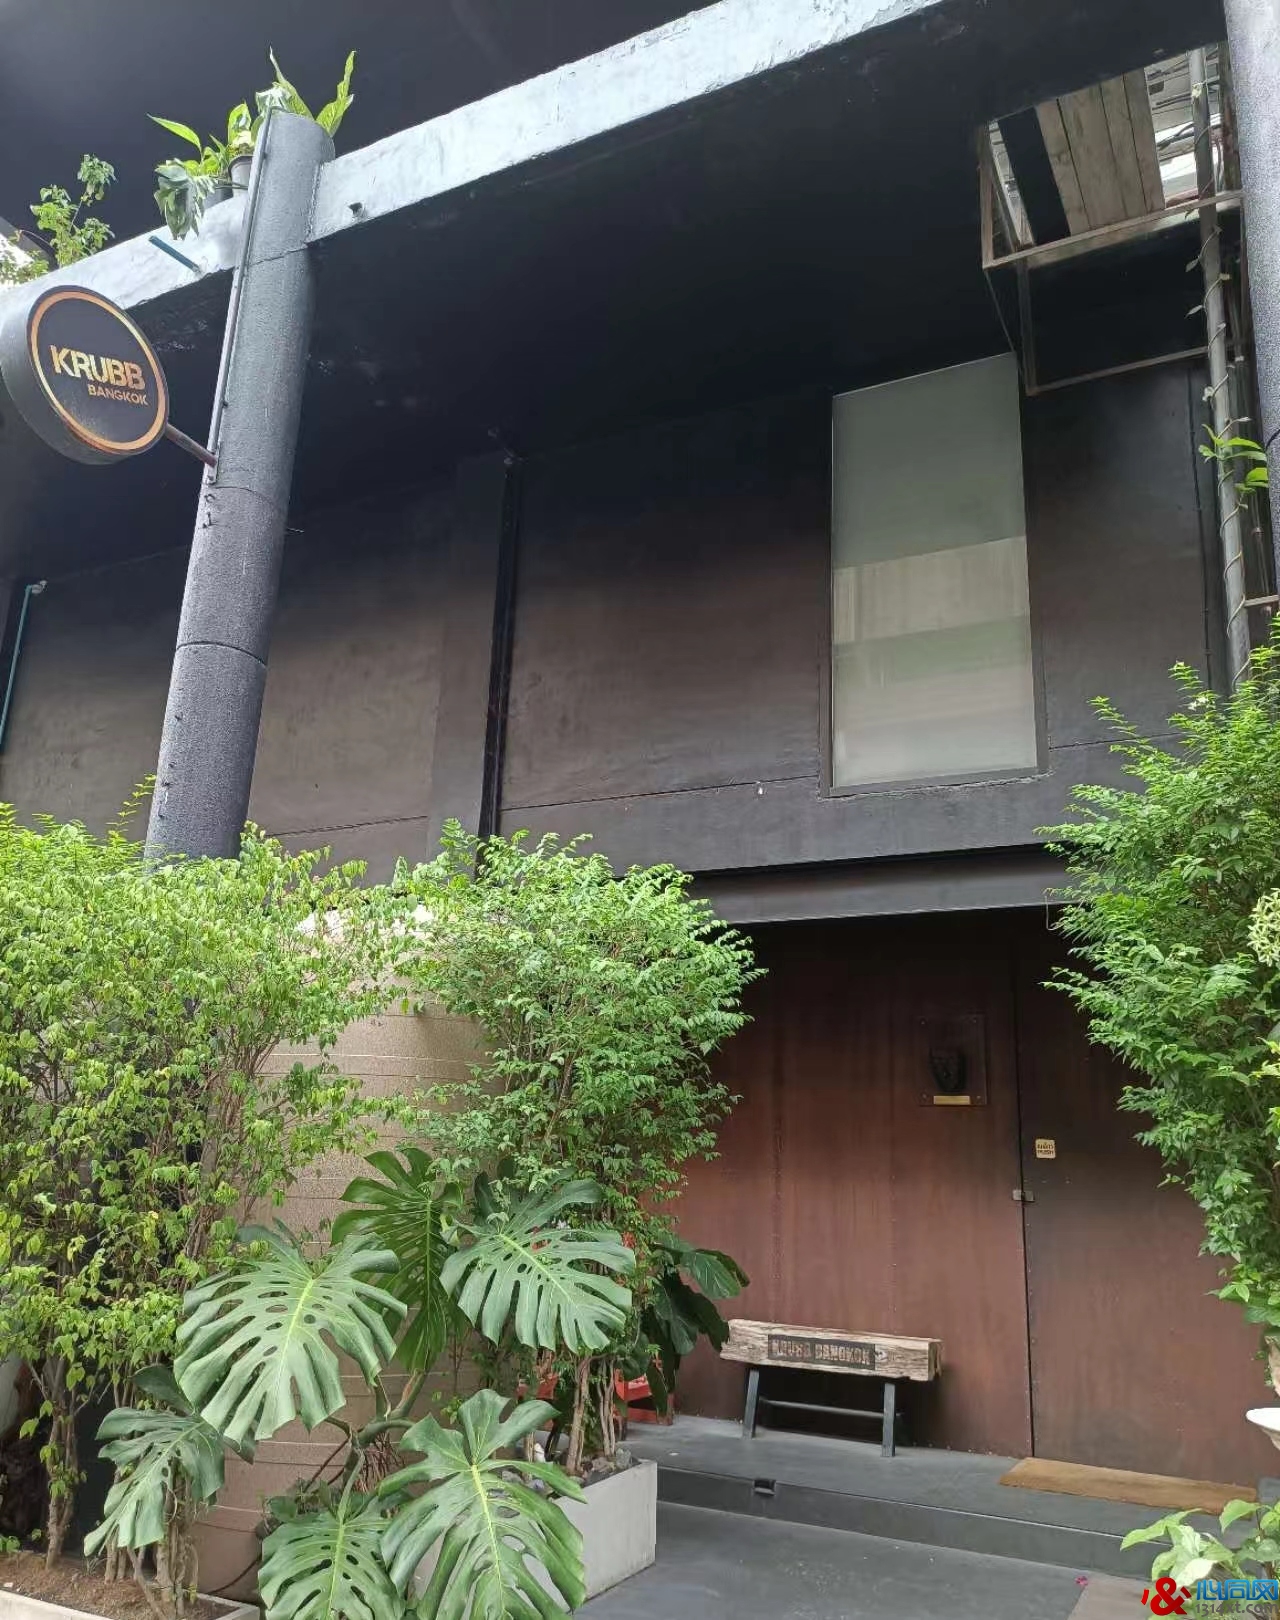 KRUBB Bangkok Social Club&Sauna